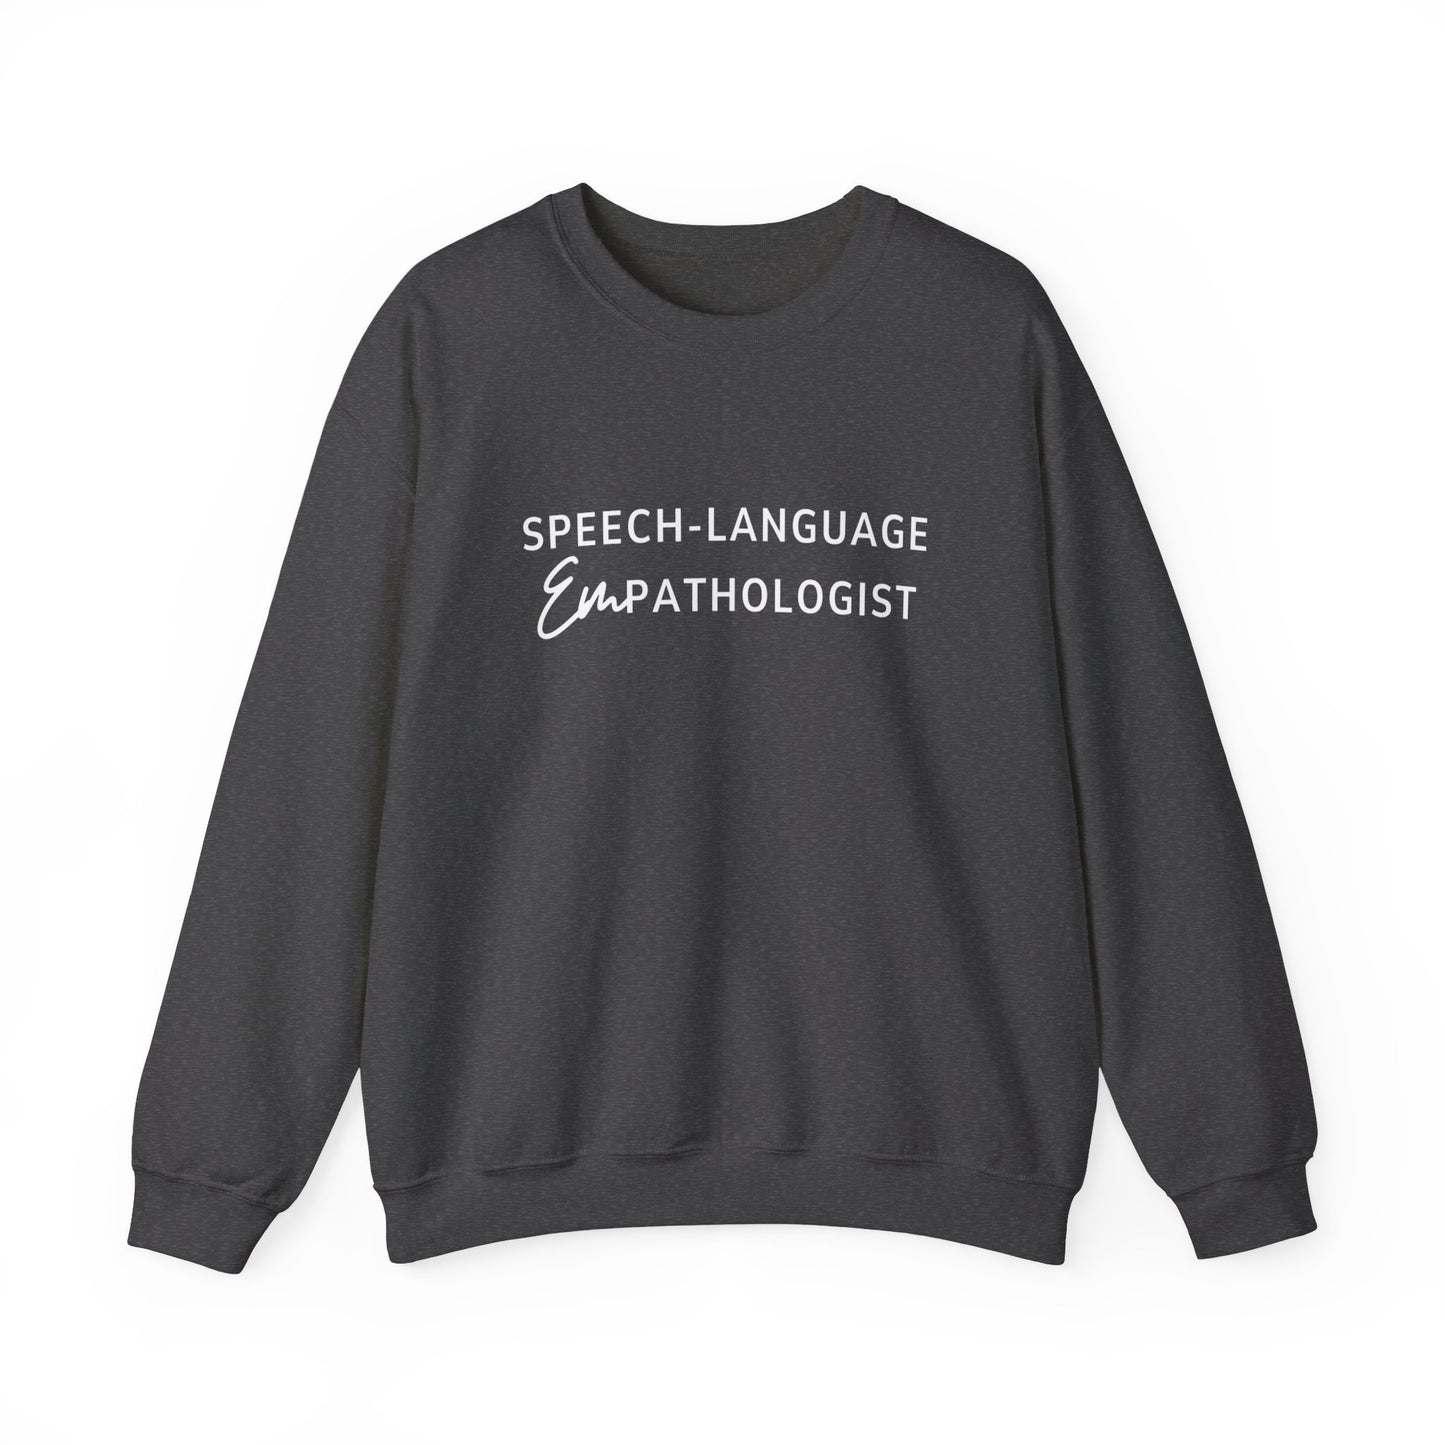 Speech-Language Empathologist Crewneck Sweatshirt